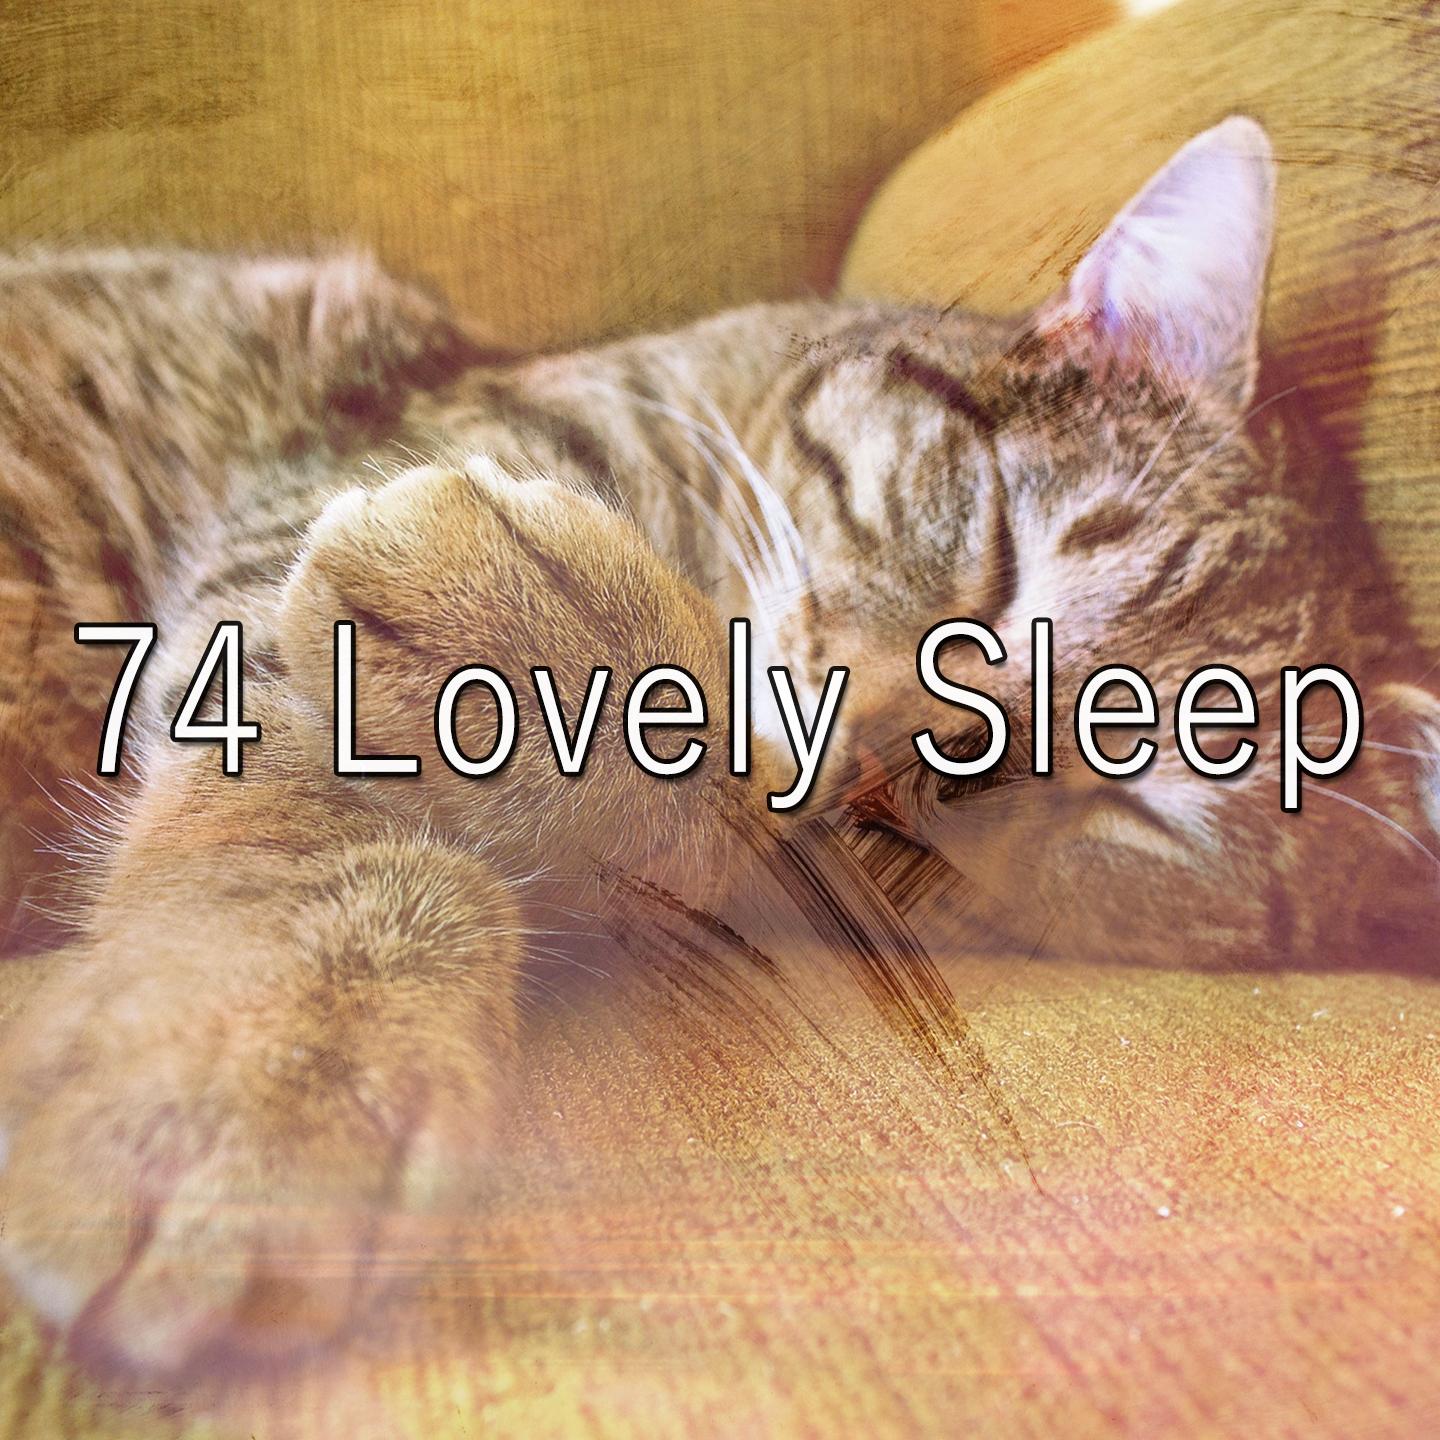 74 Lovely Sleep